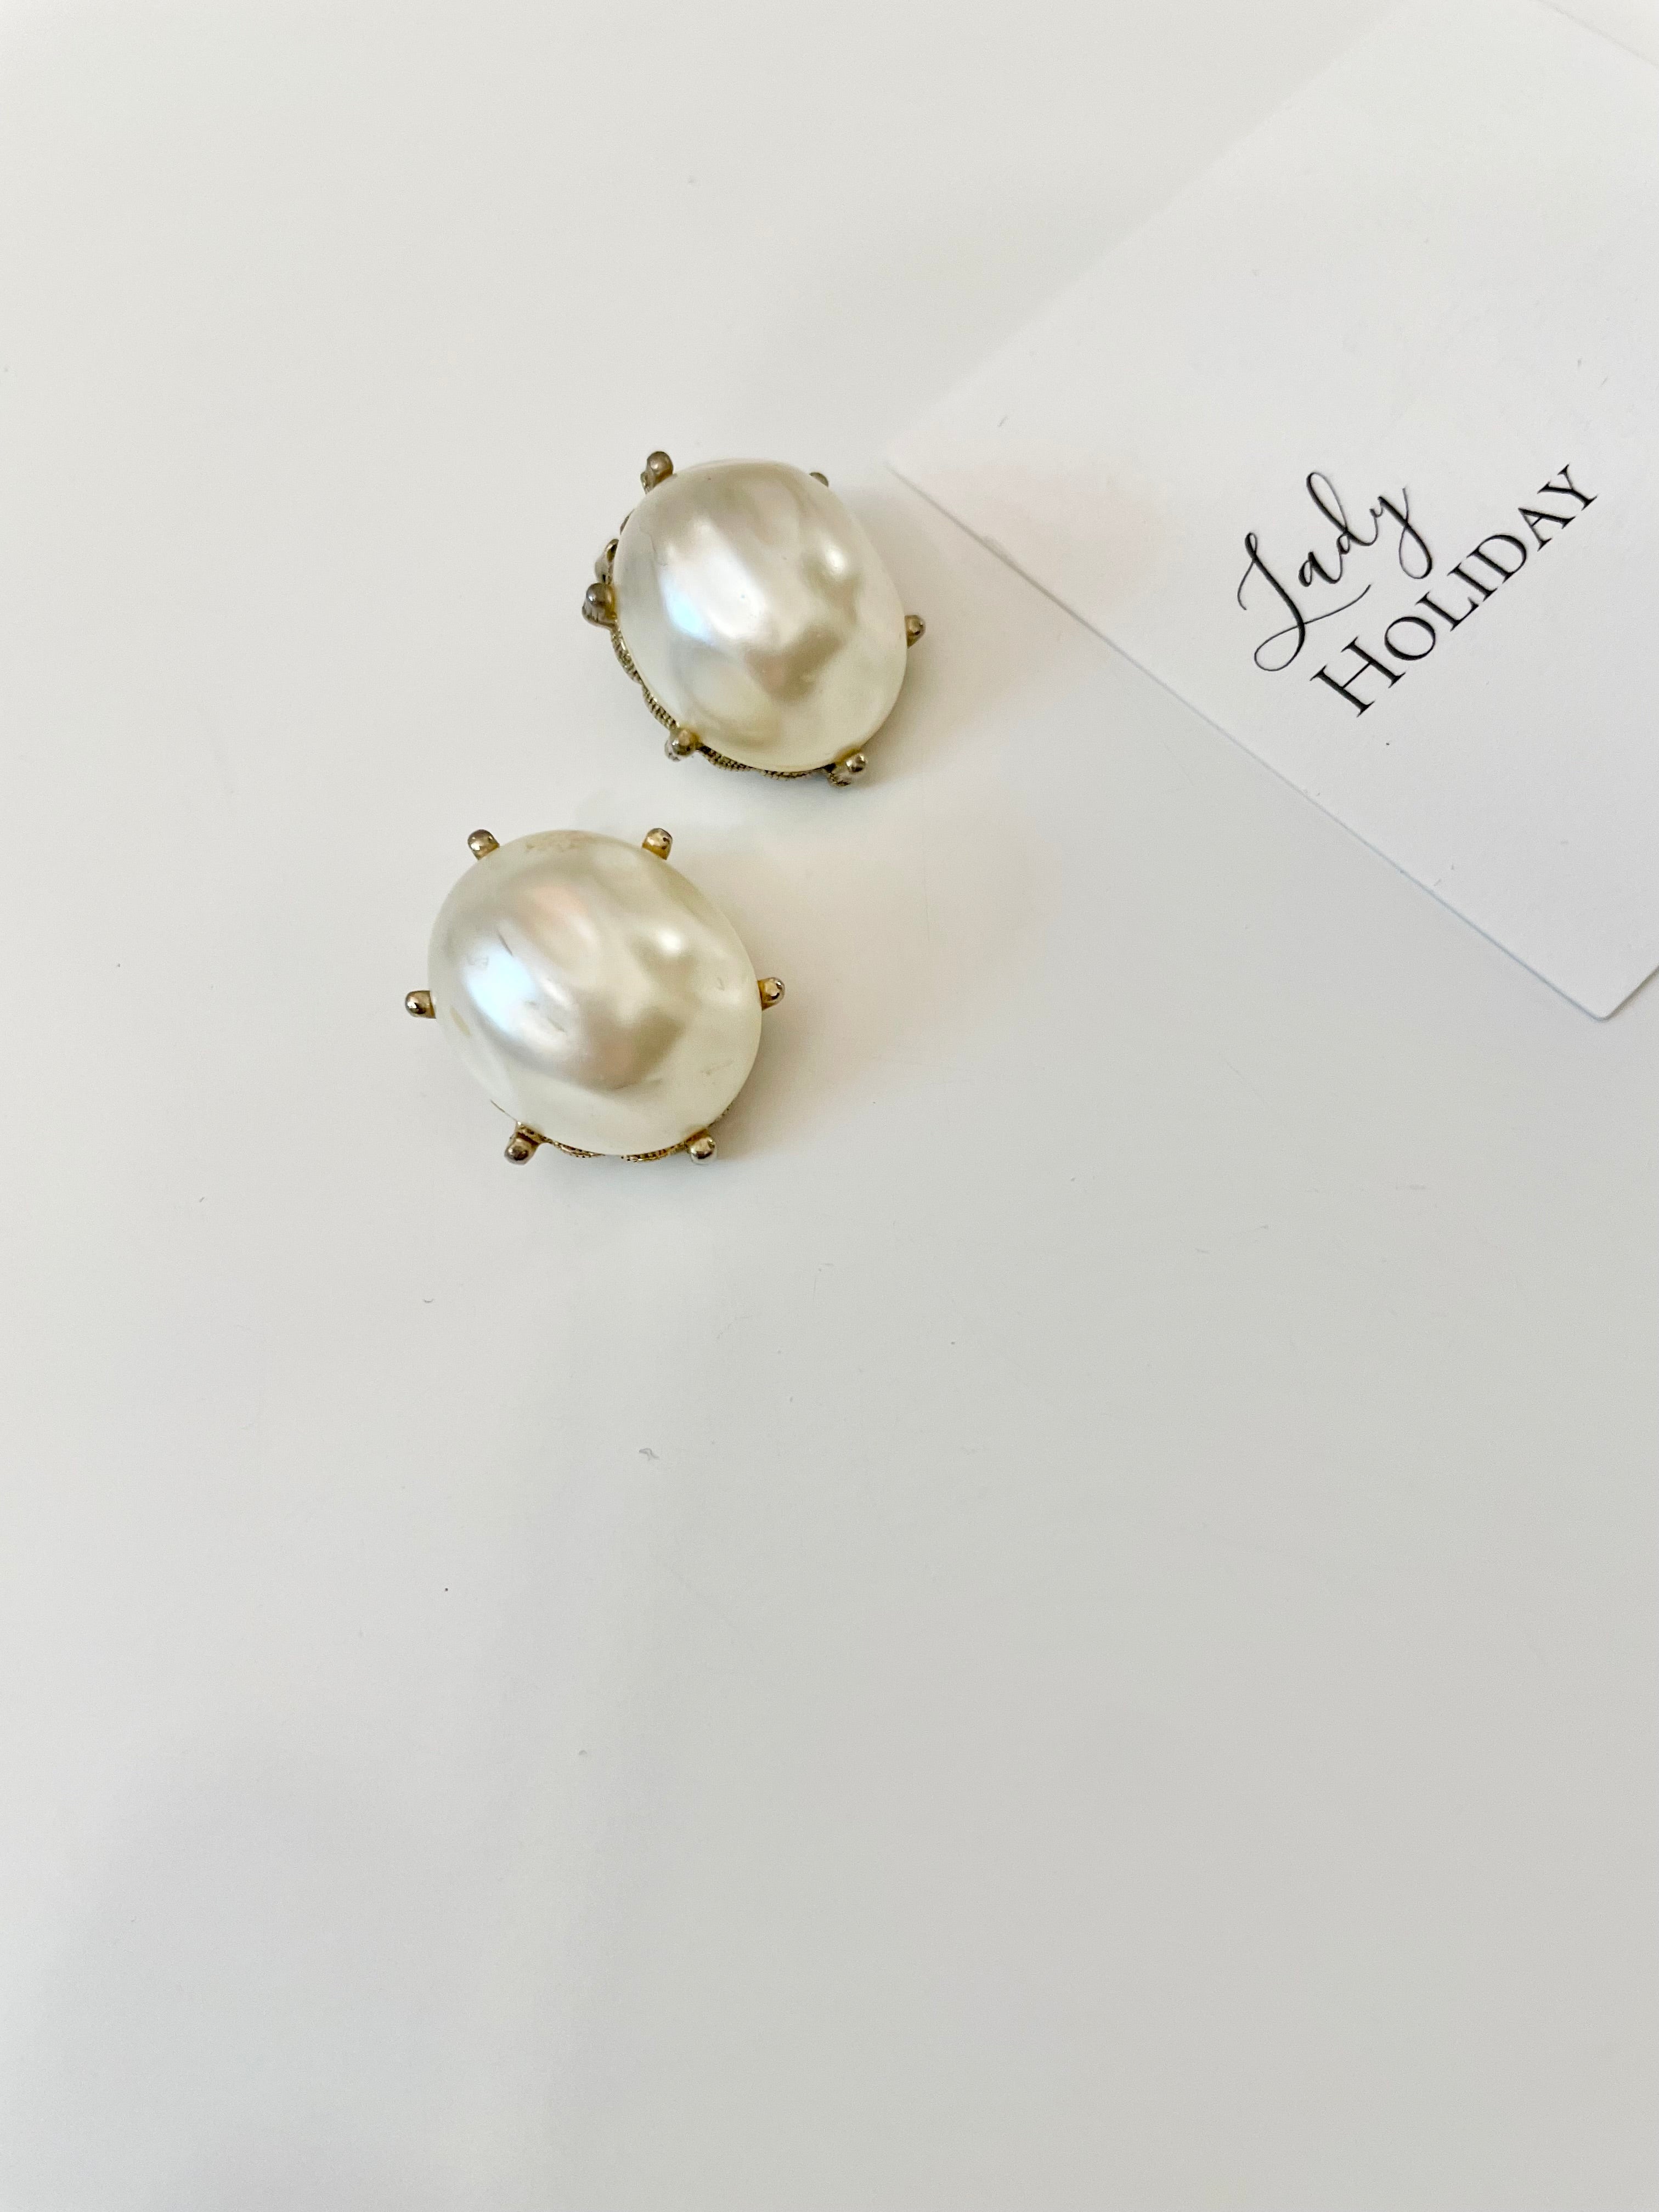 Vintage 1950's delightful faux baroque pearl clip earrings.... so lovely